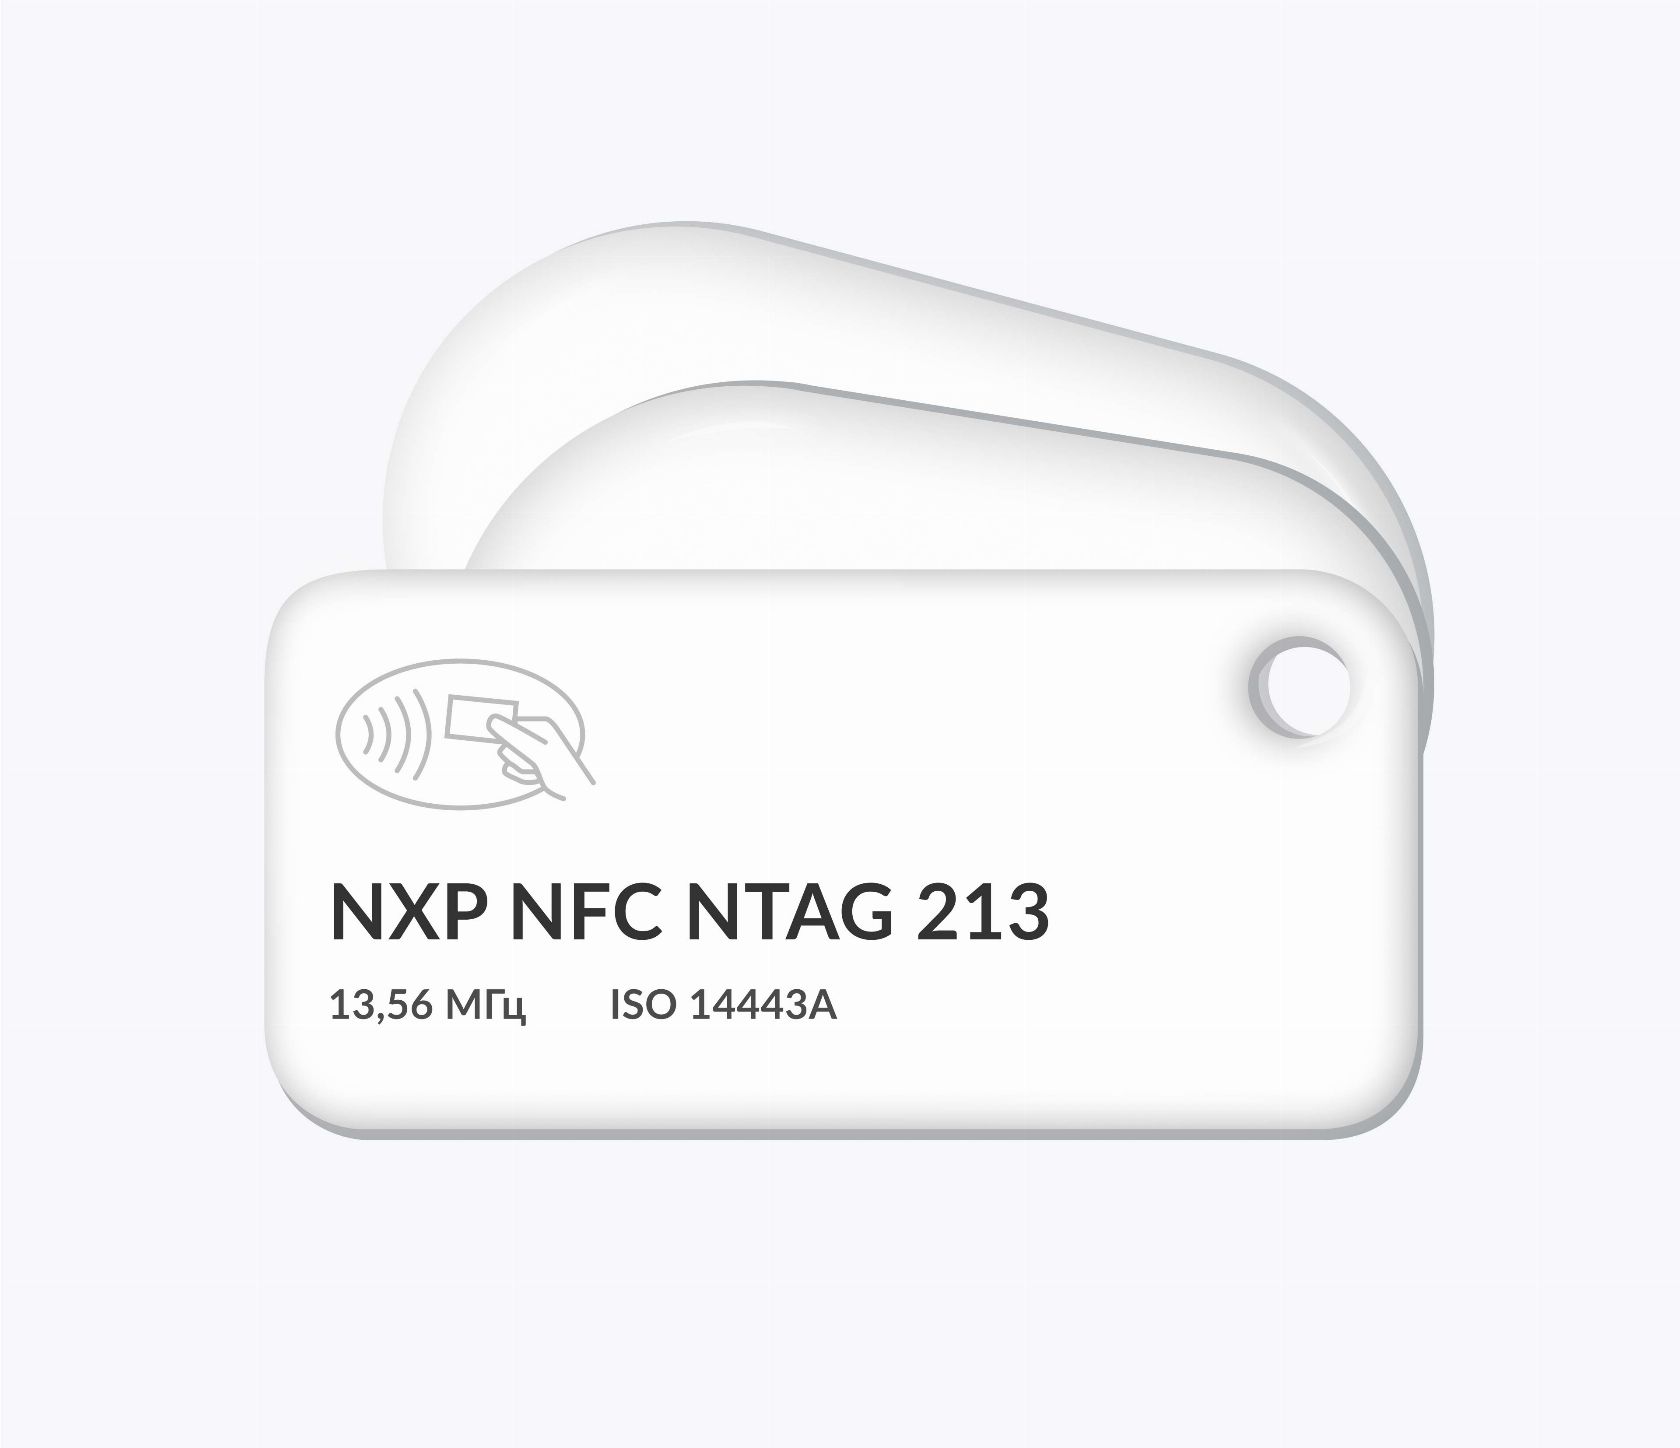 RFID-брелоки NEOKEY® с чипом NXP NFC NTAG 213 и вашим логотипом